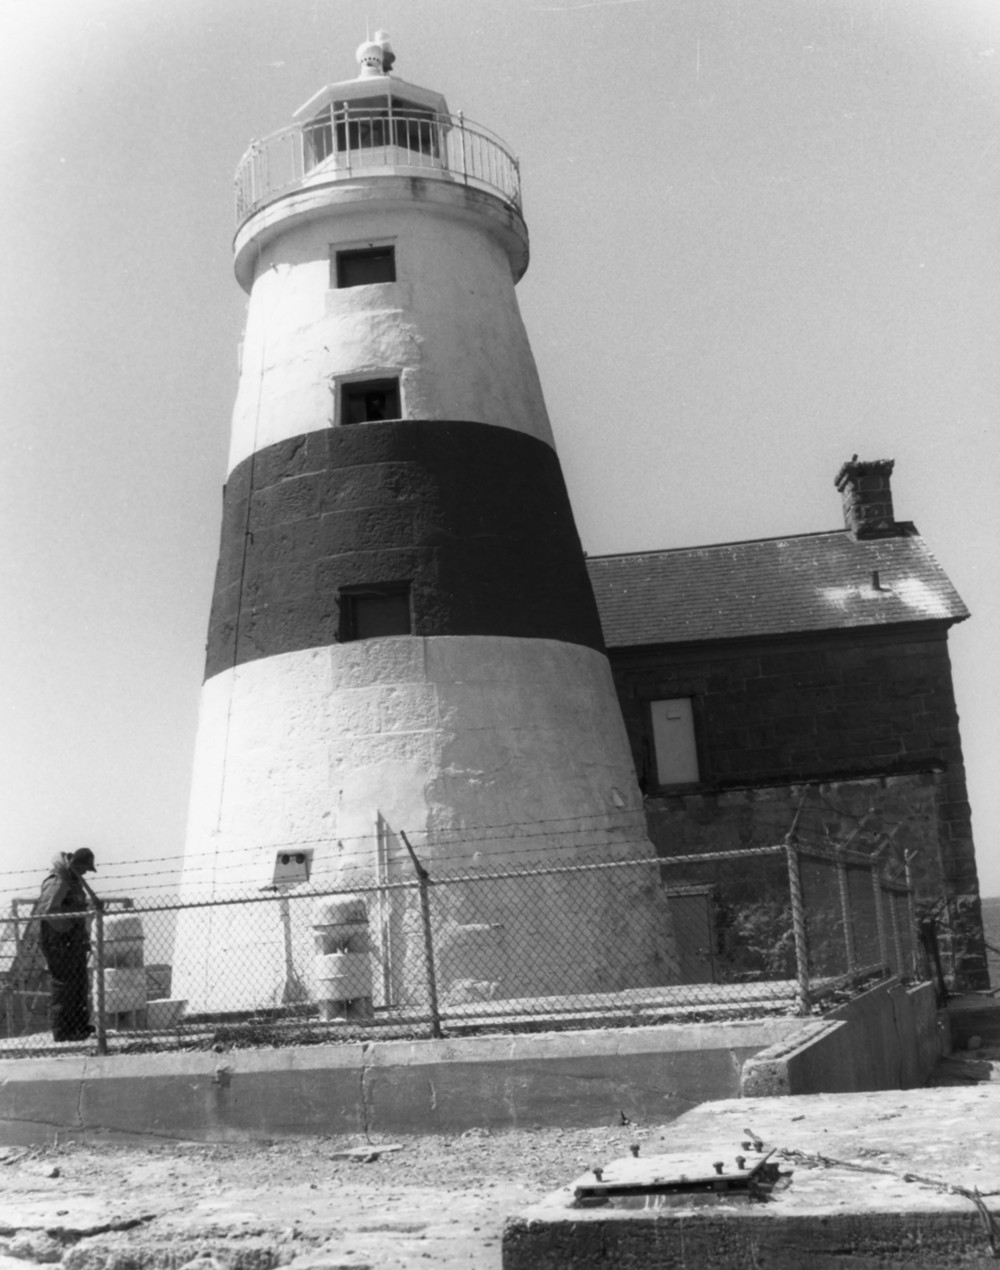 Execution Rocks Lighthouse, Port Washington New York Lighthouse exterior view looking south (2004)